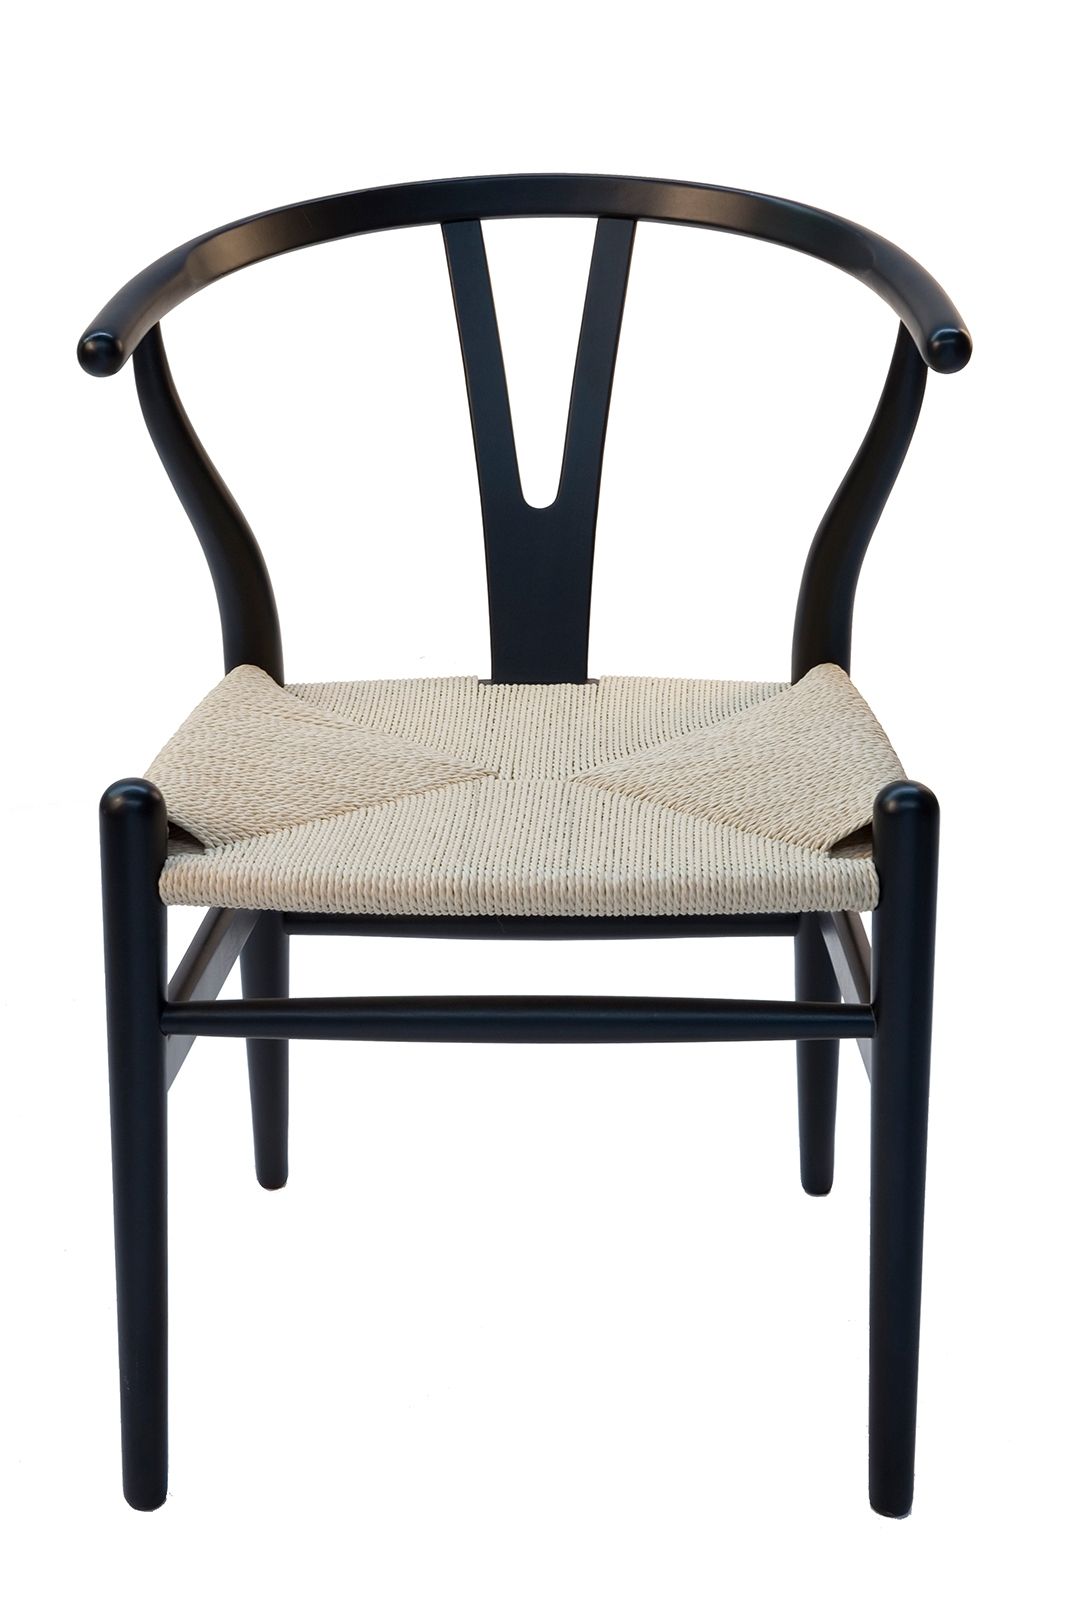 Replica Hans Wegner Wishbone Chair | Black Frame & Natural Seat